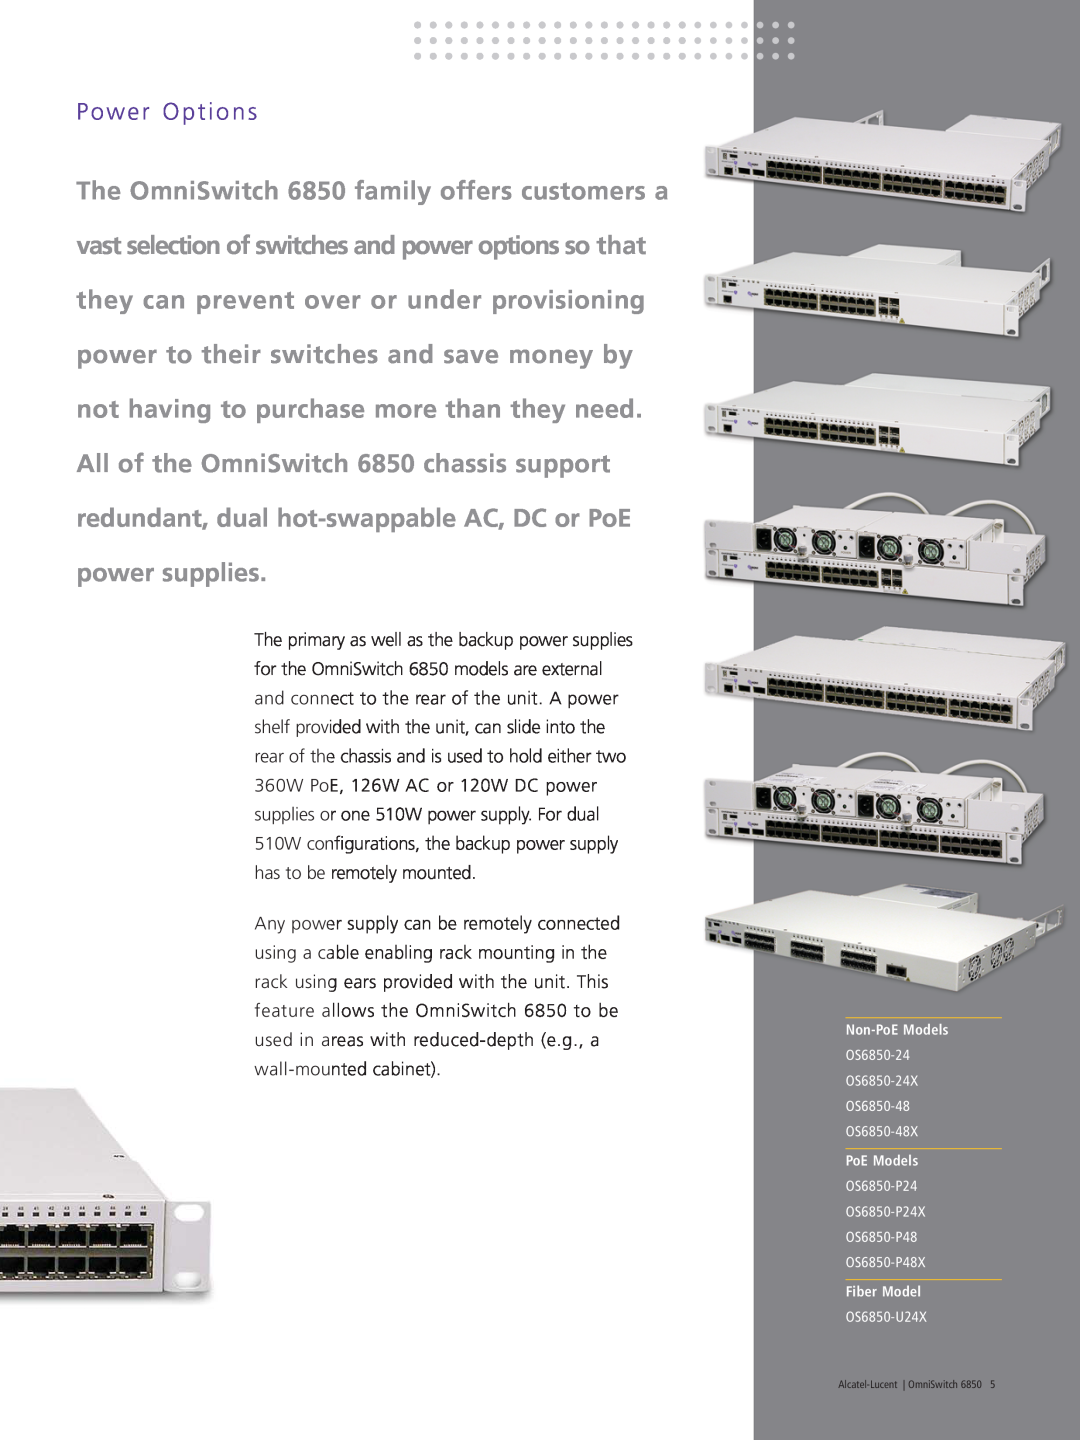 Riverstone Networks 6850 manual Power Options, Non-PoE Models, Fiber Model 